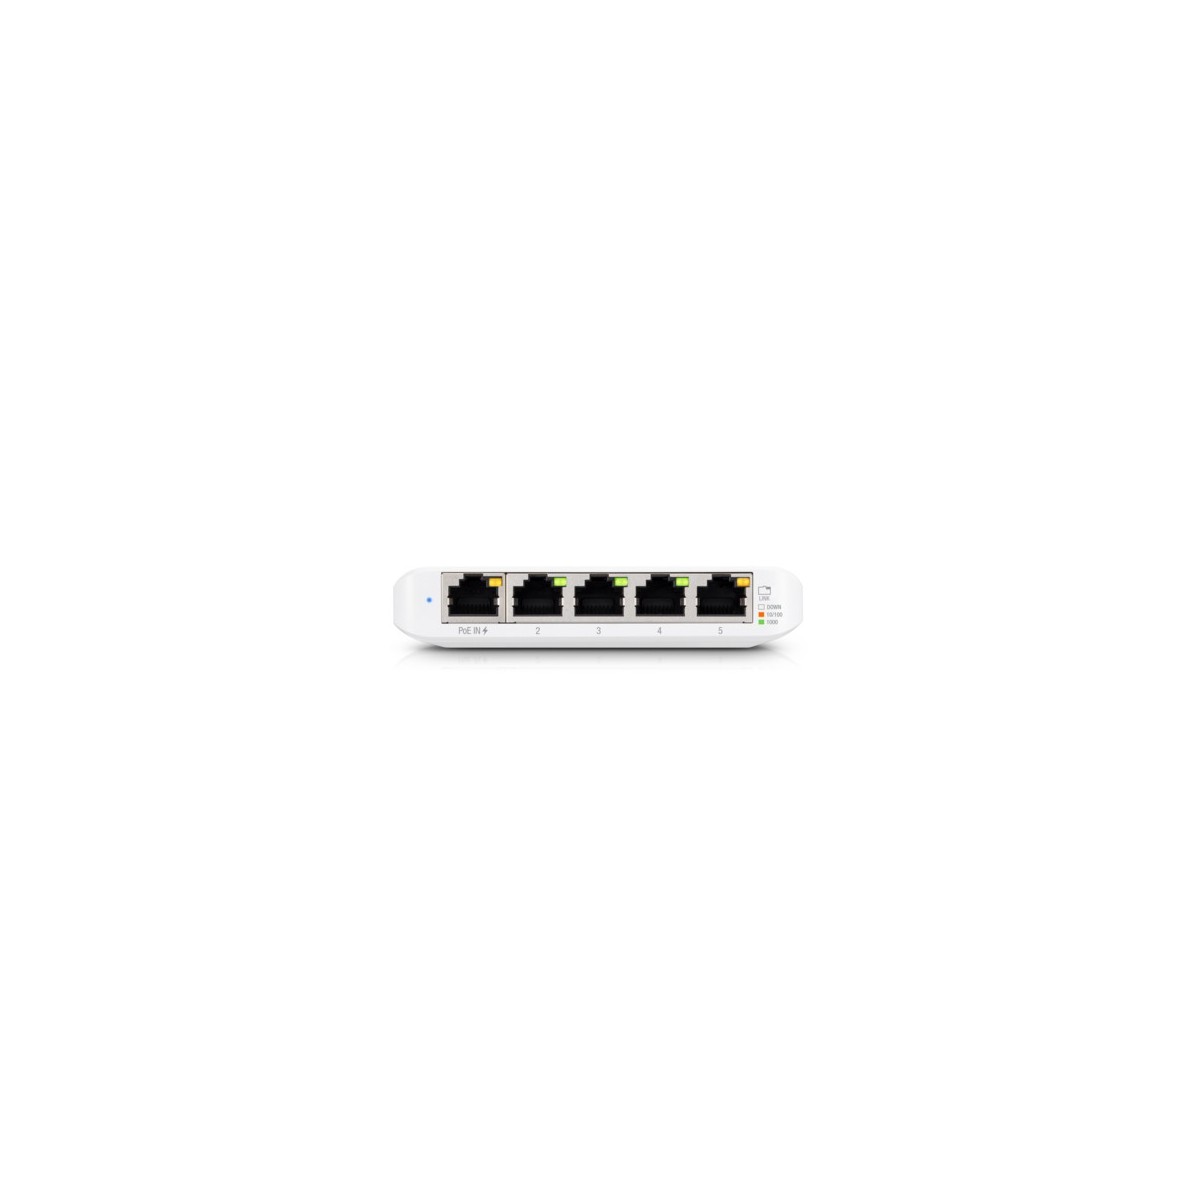 Ubiquiti USW-Flex-Mini-5 5-Port managed Gigabit Ethernet switch powered by 802.3af/at PoE or 5V, 1A USB-C power adapter